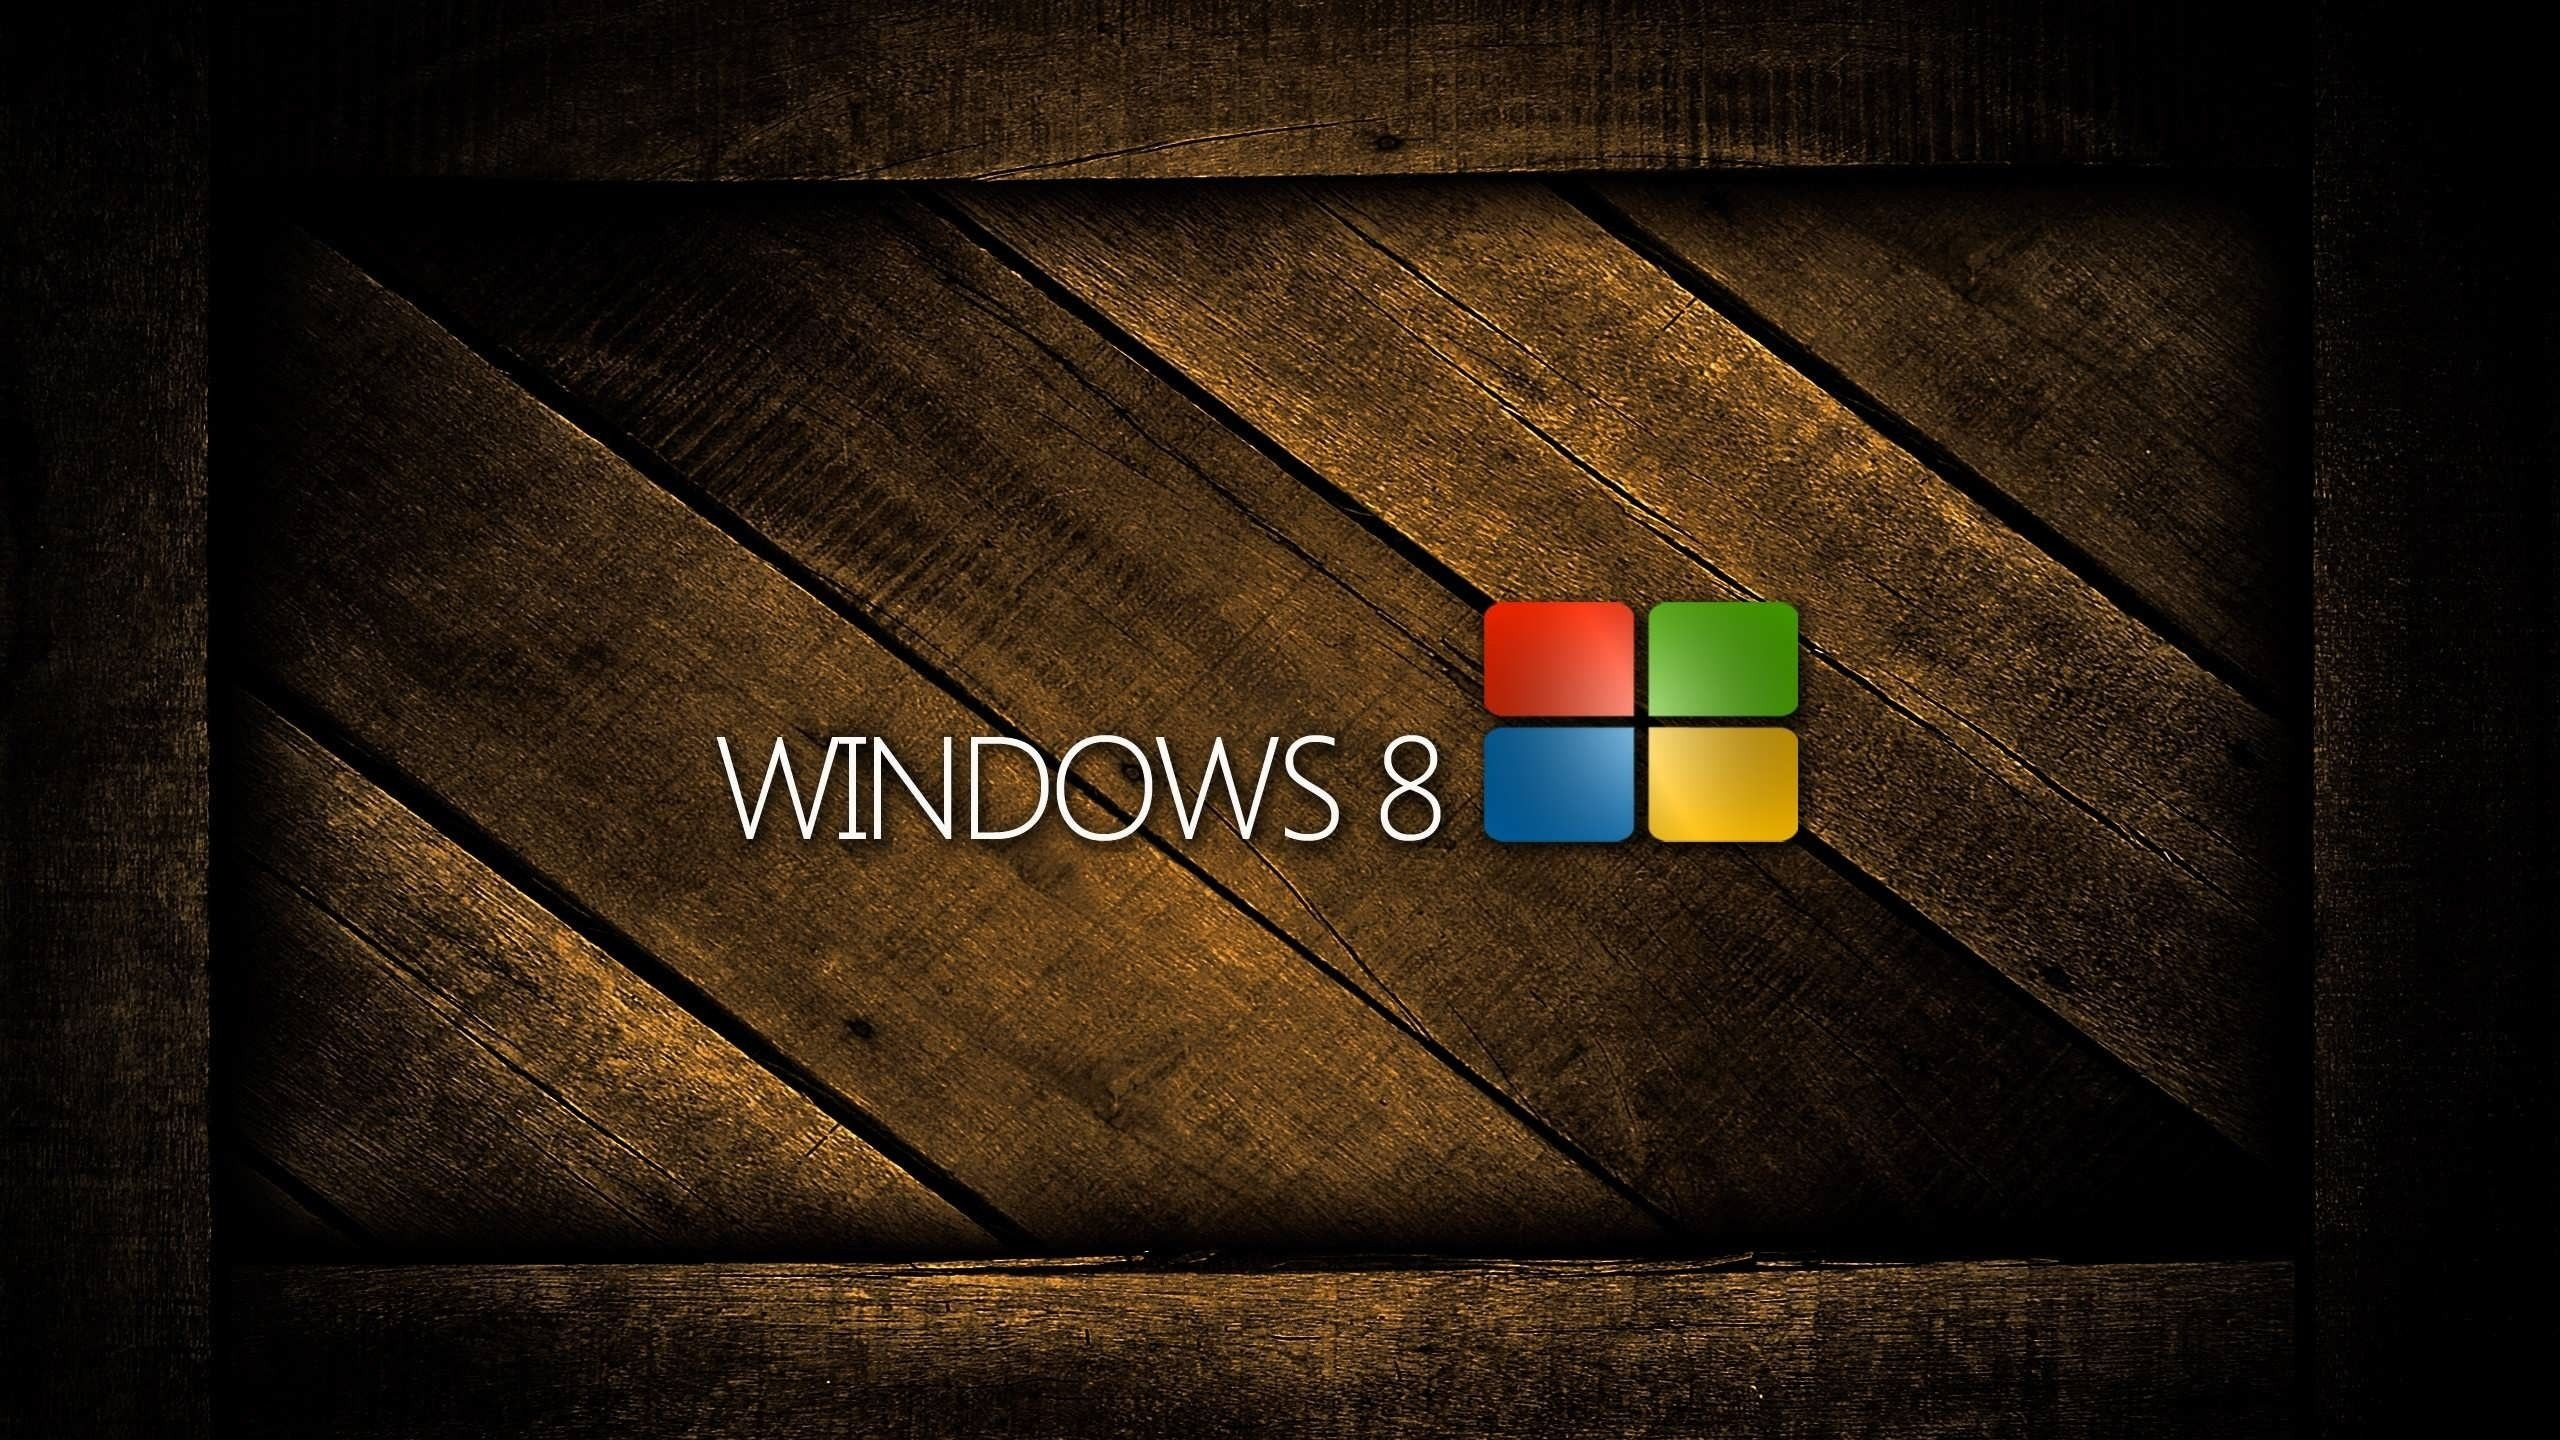 Windows8, Microsoft Windows, 图形设计, 品牌, 纹理 壁纸 2560x1440 允许